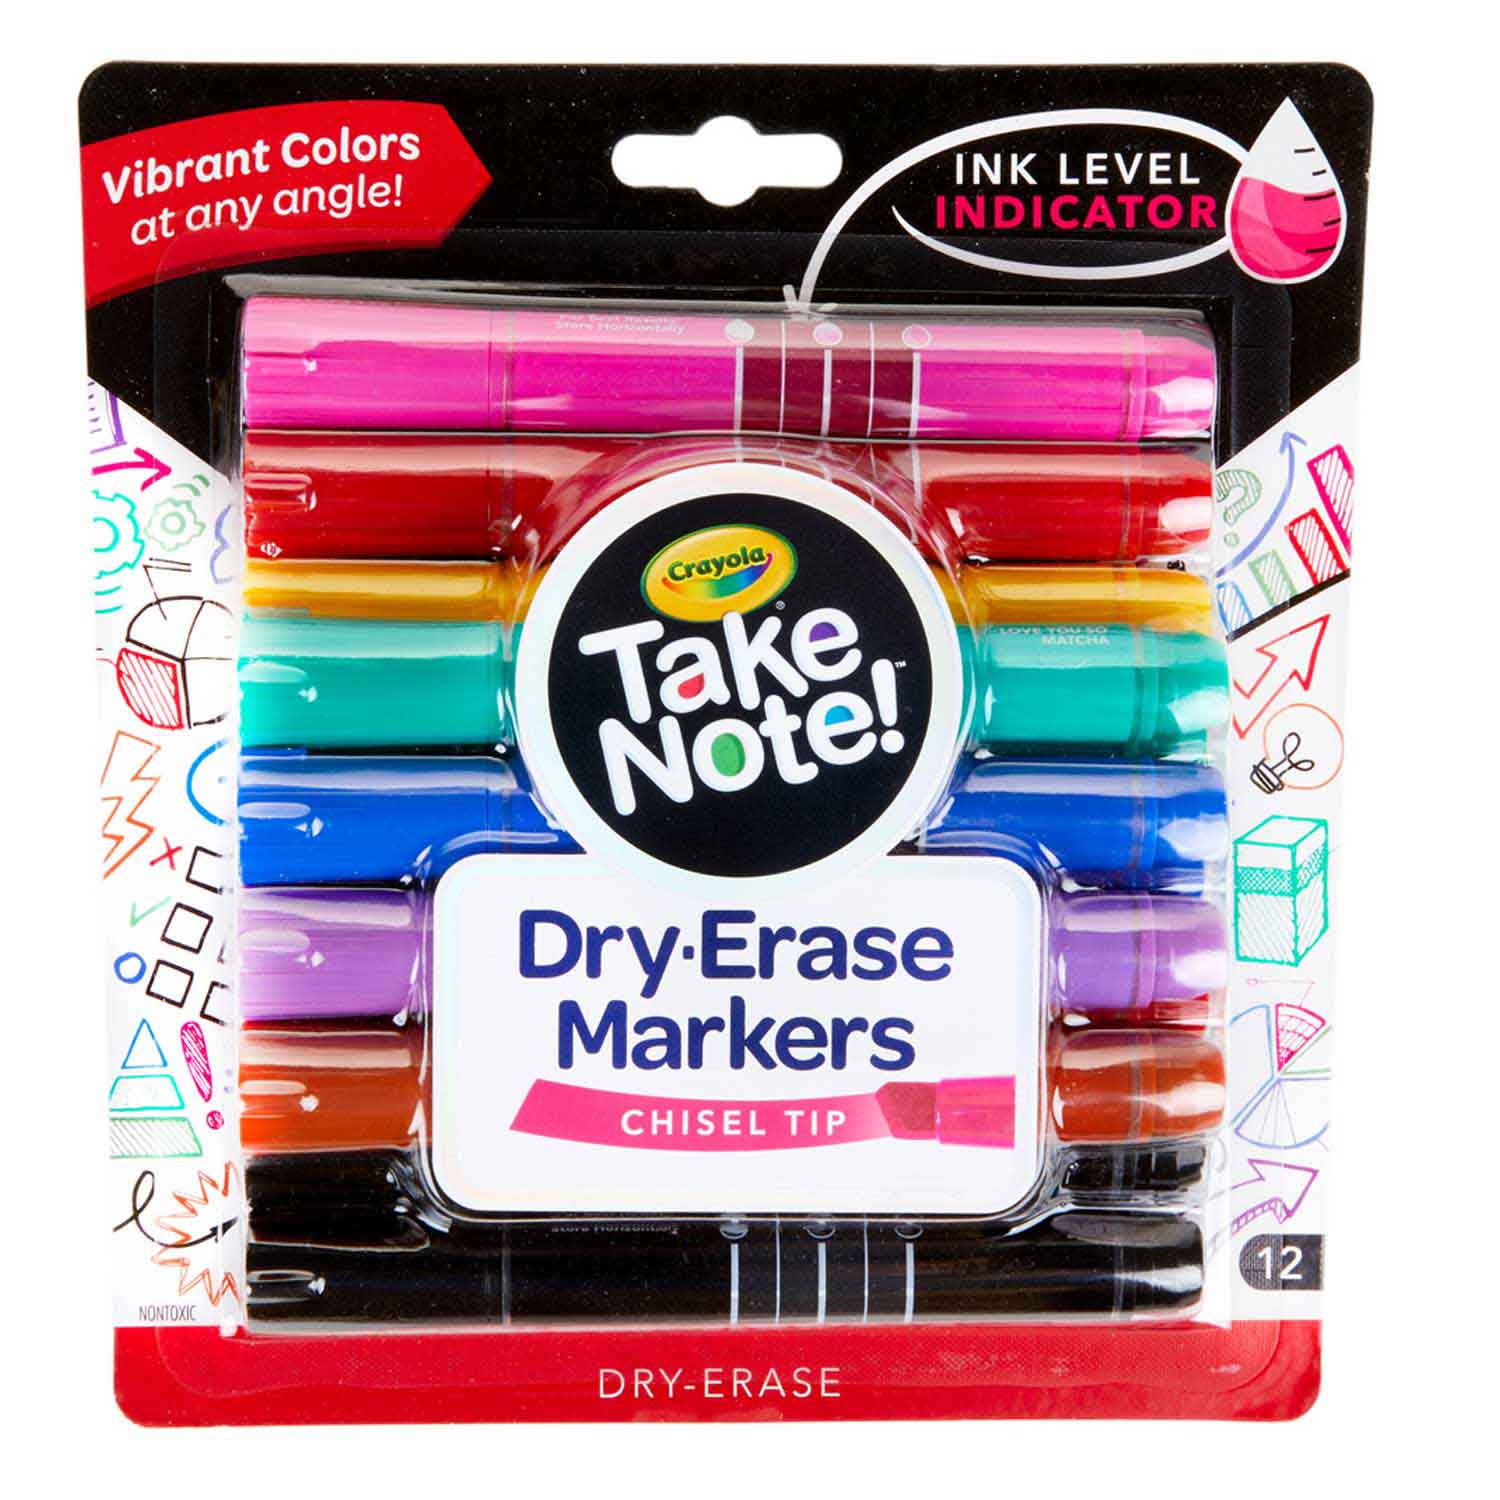 Crayola 98-5912 Washable Dry-Erase Fine Line Markers, 12